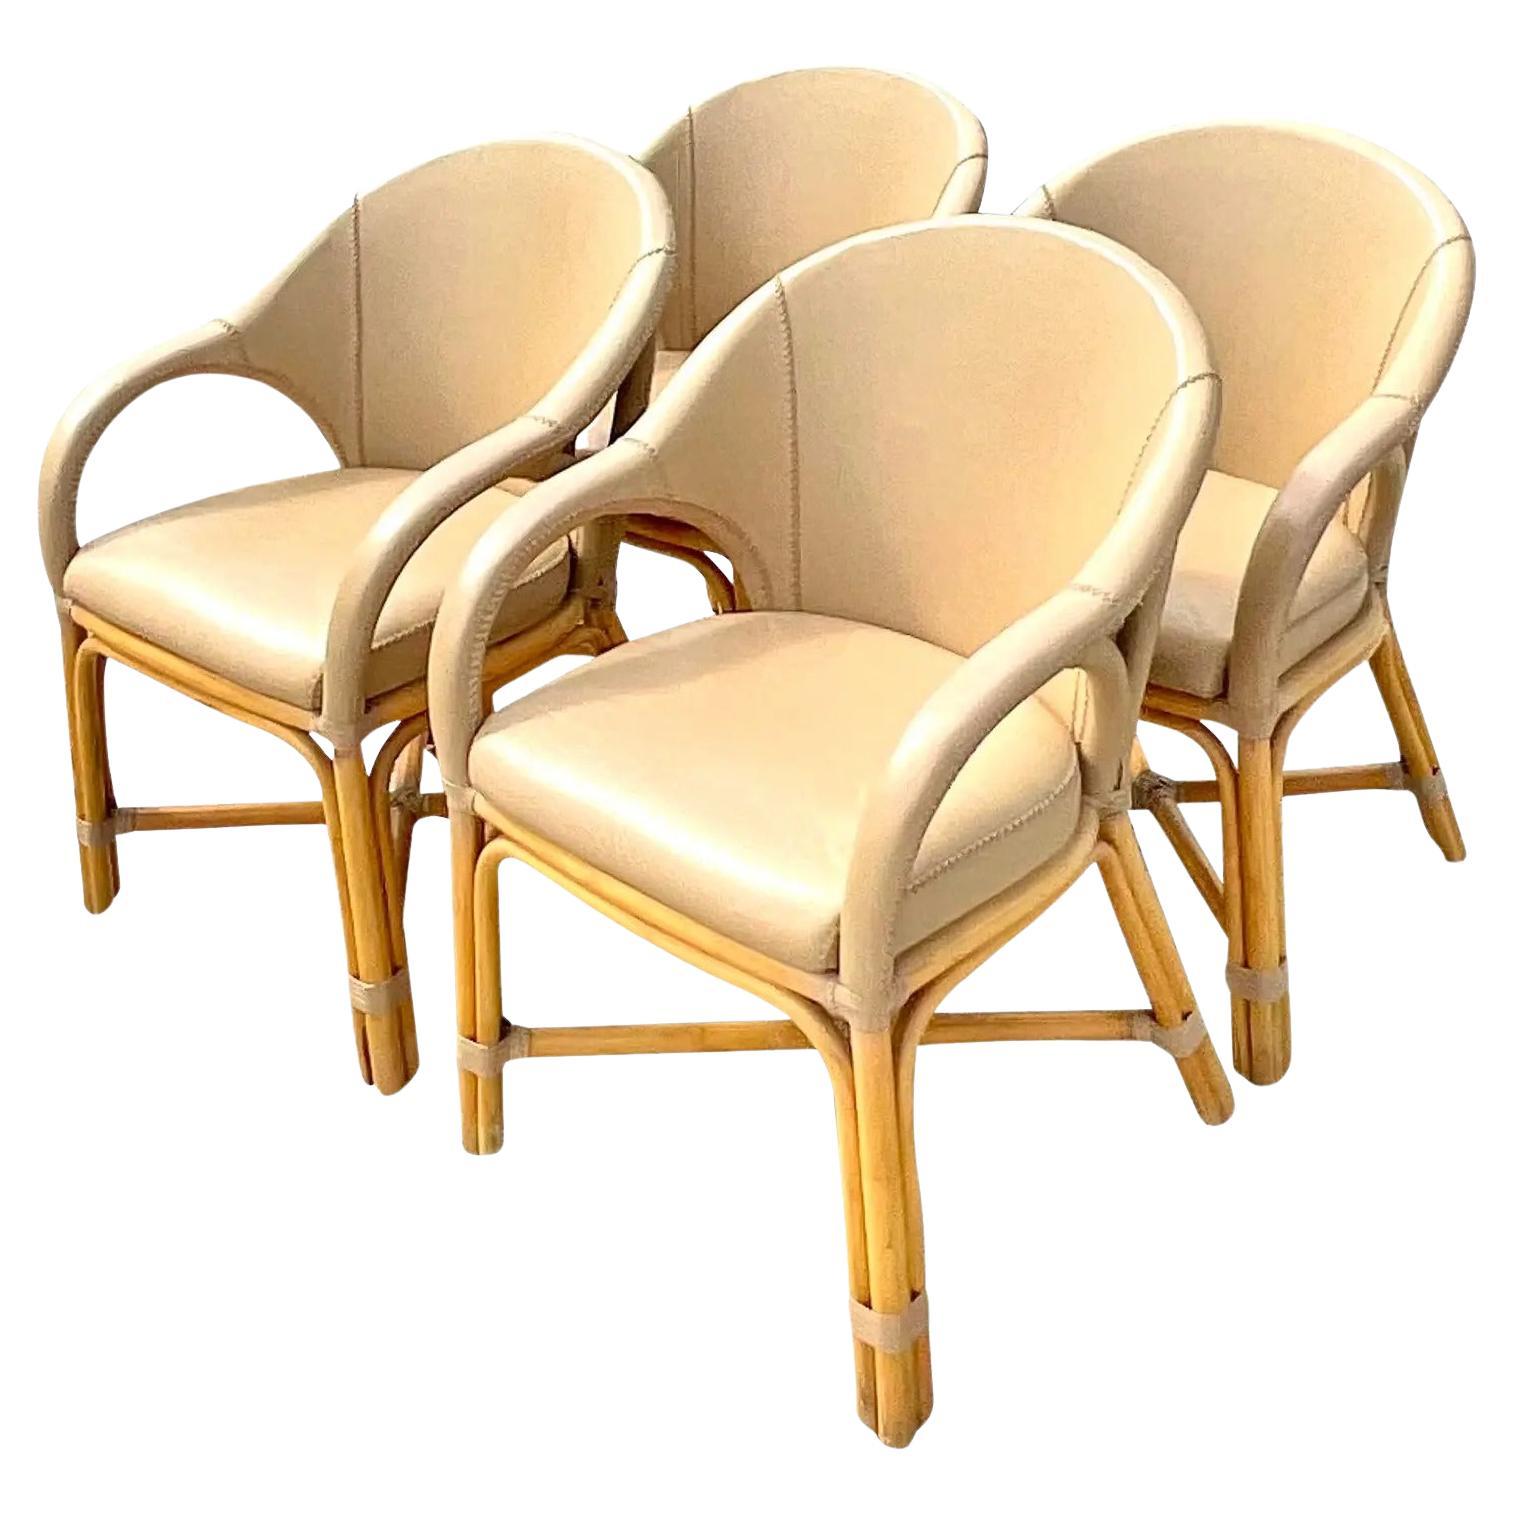 Vintage Coastal Antonio Budji Leather and Rattan Dining Chairs, Set of 4